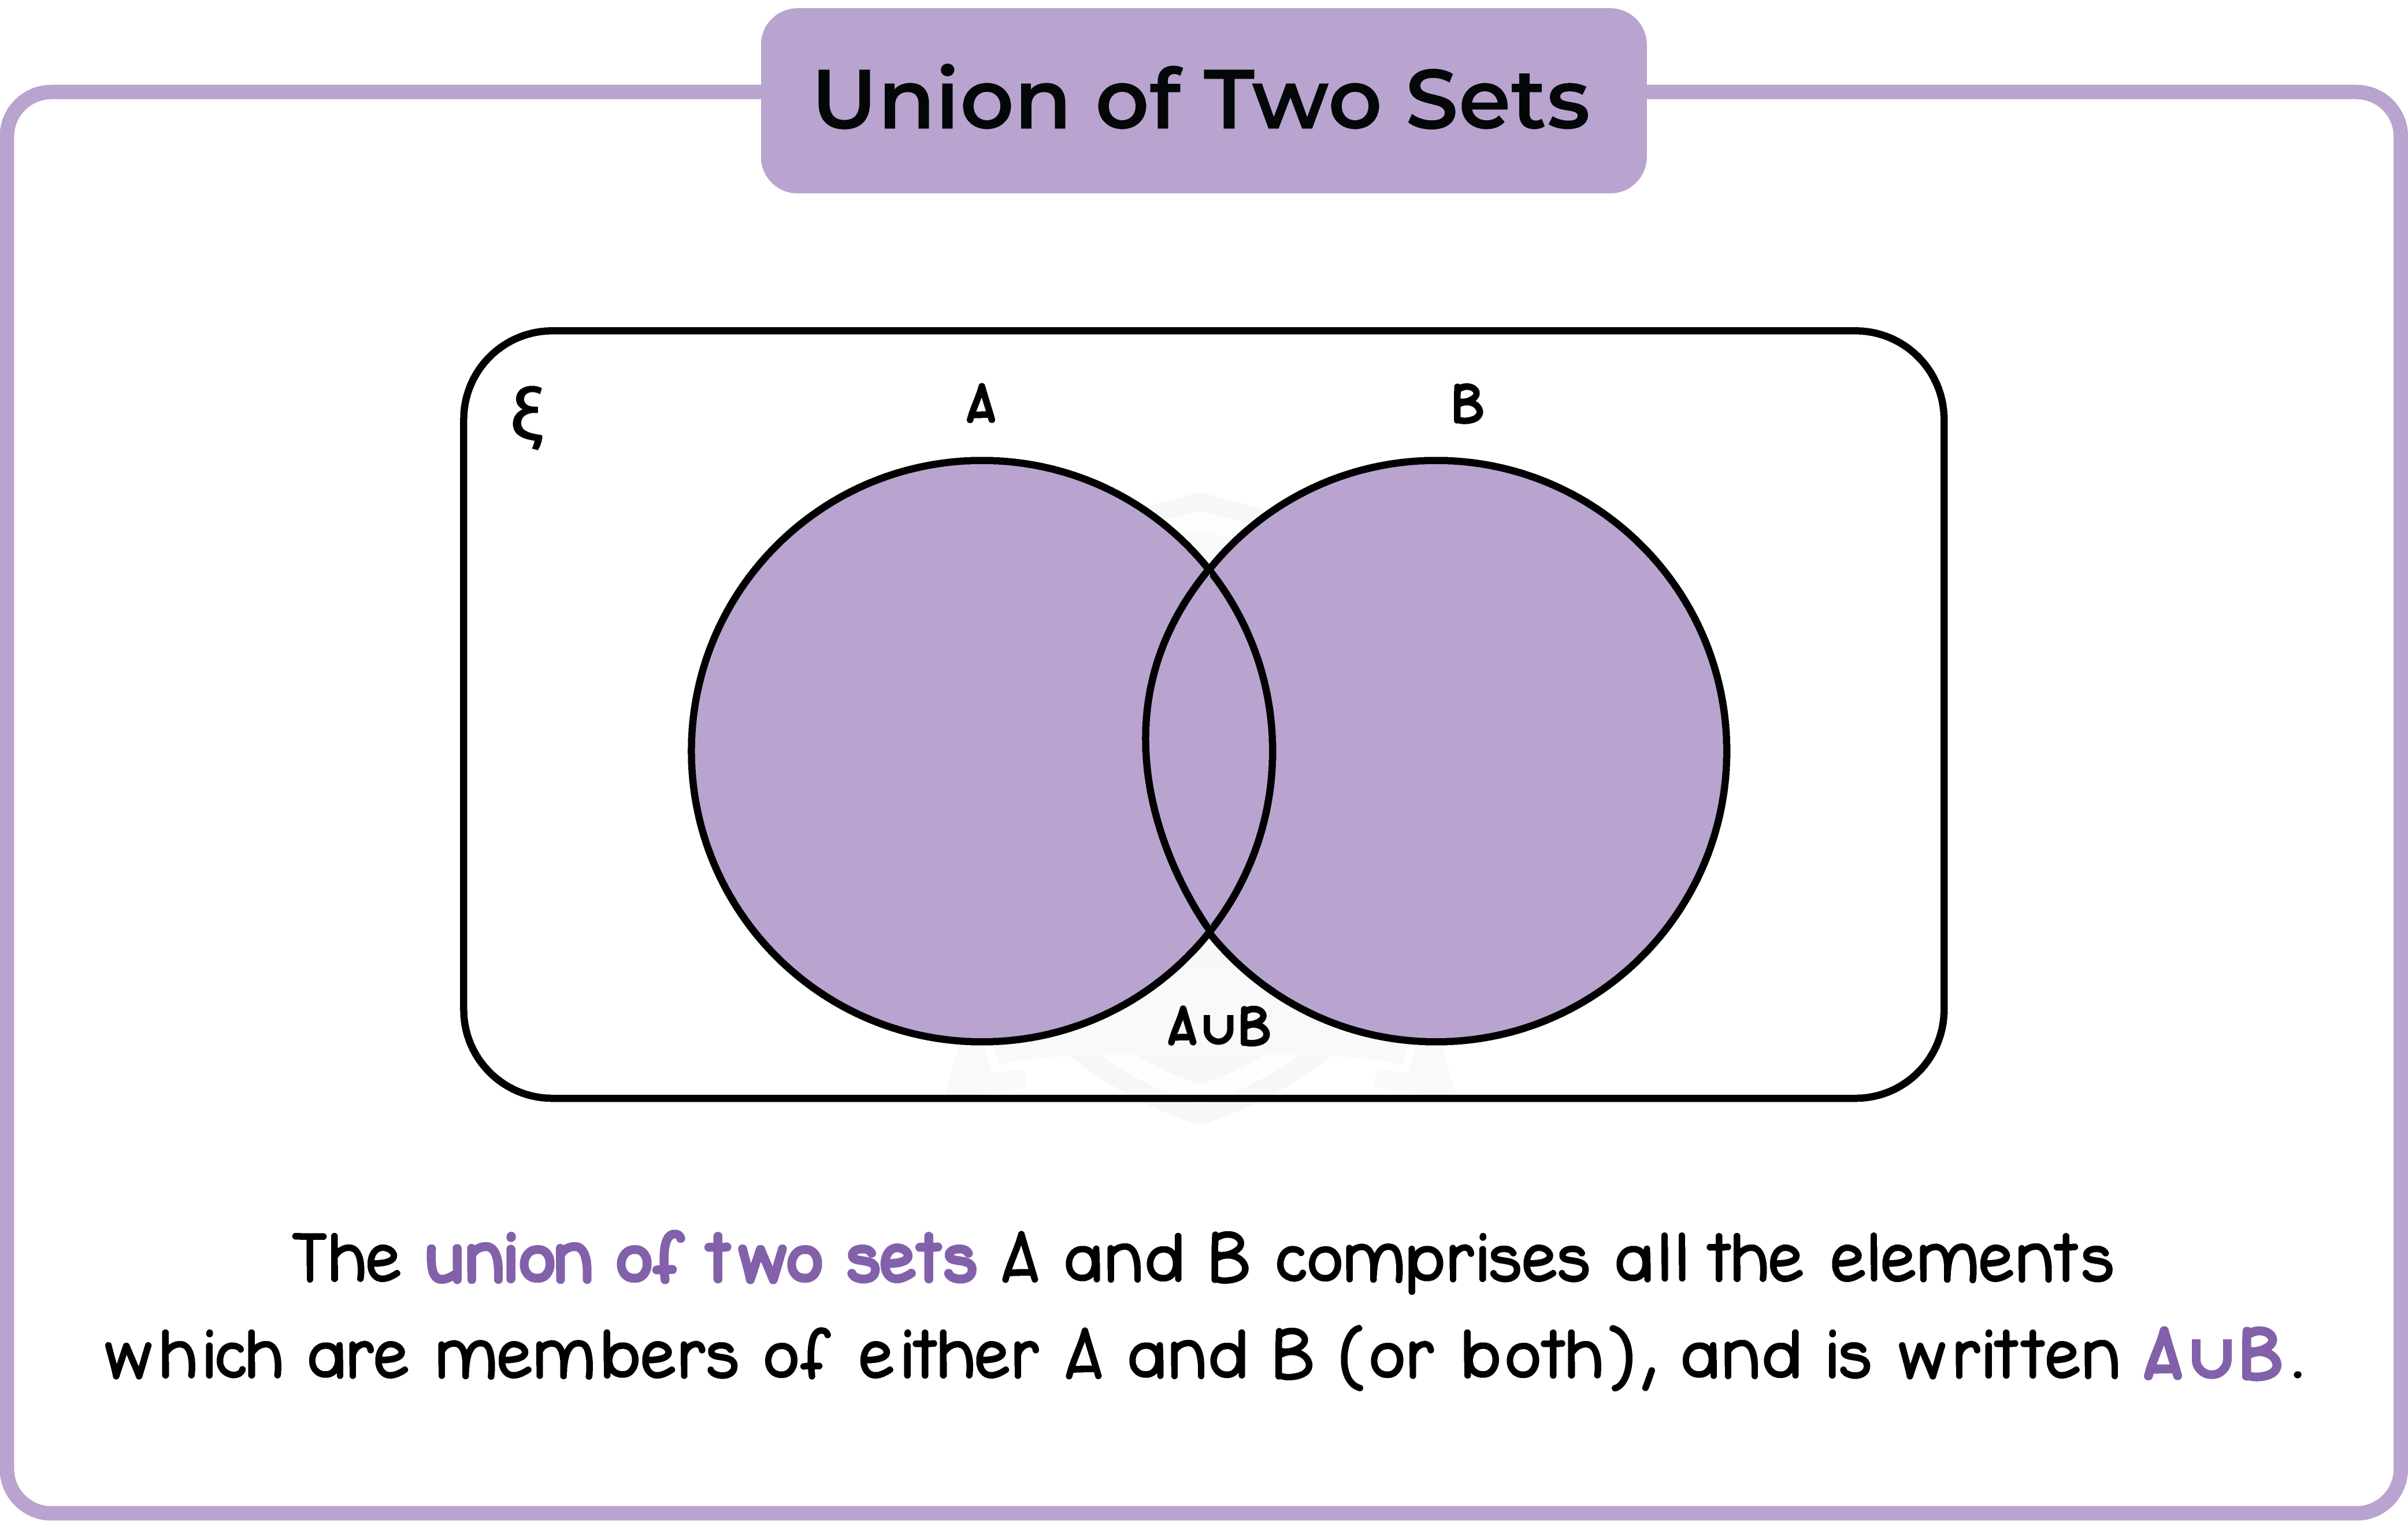 edexcel_igcse_mathematics a_topic 05_set language and notation_003_union two sets